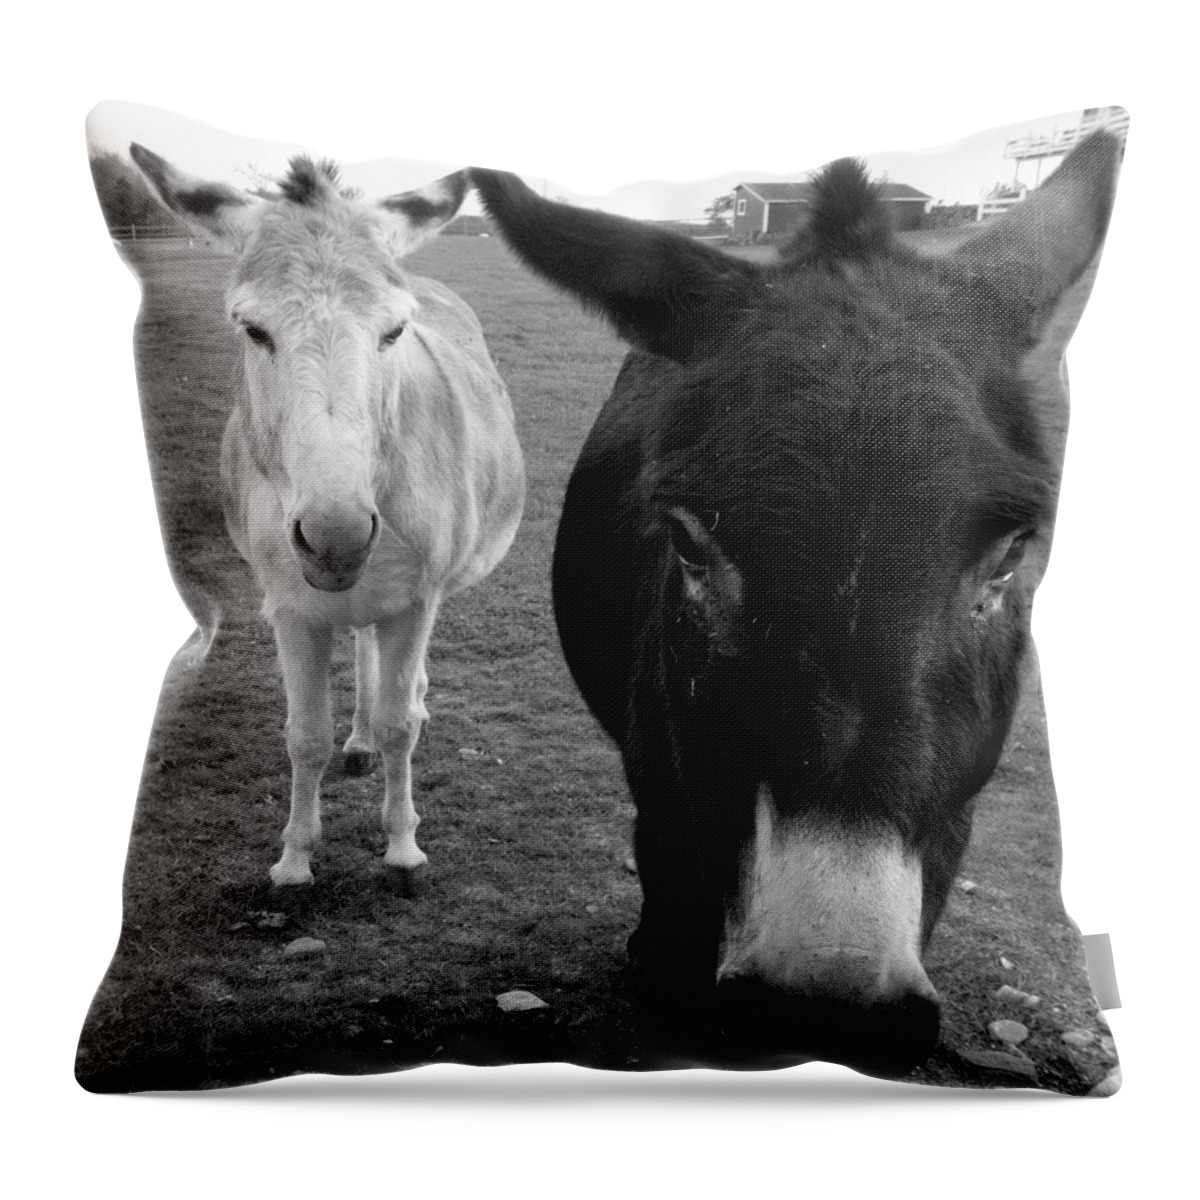 Donkeys Throw Pillow featuring the photograph Donks by Kim Galluzzo Wozniak